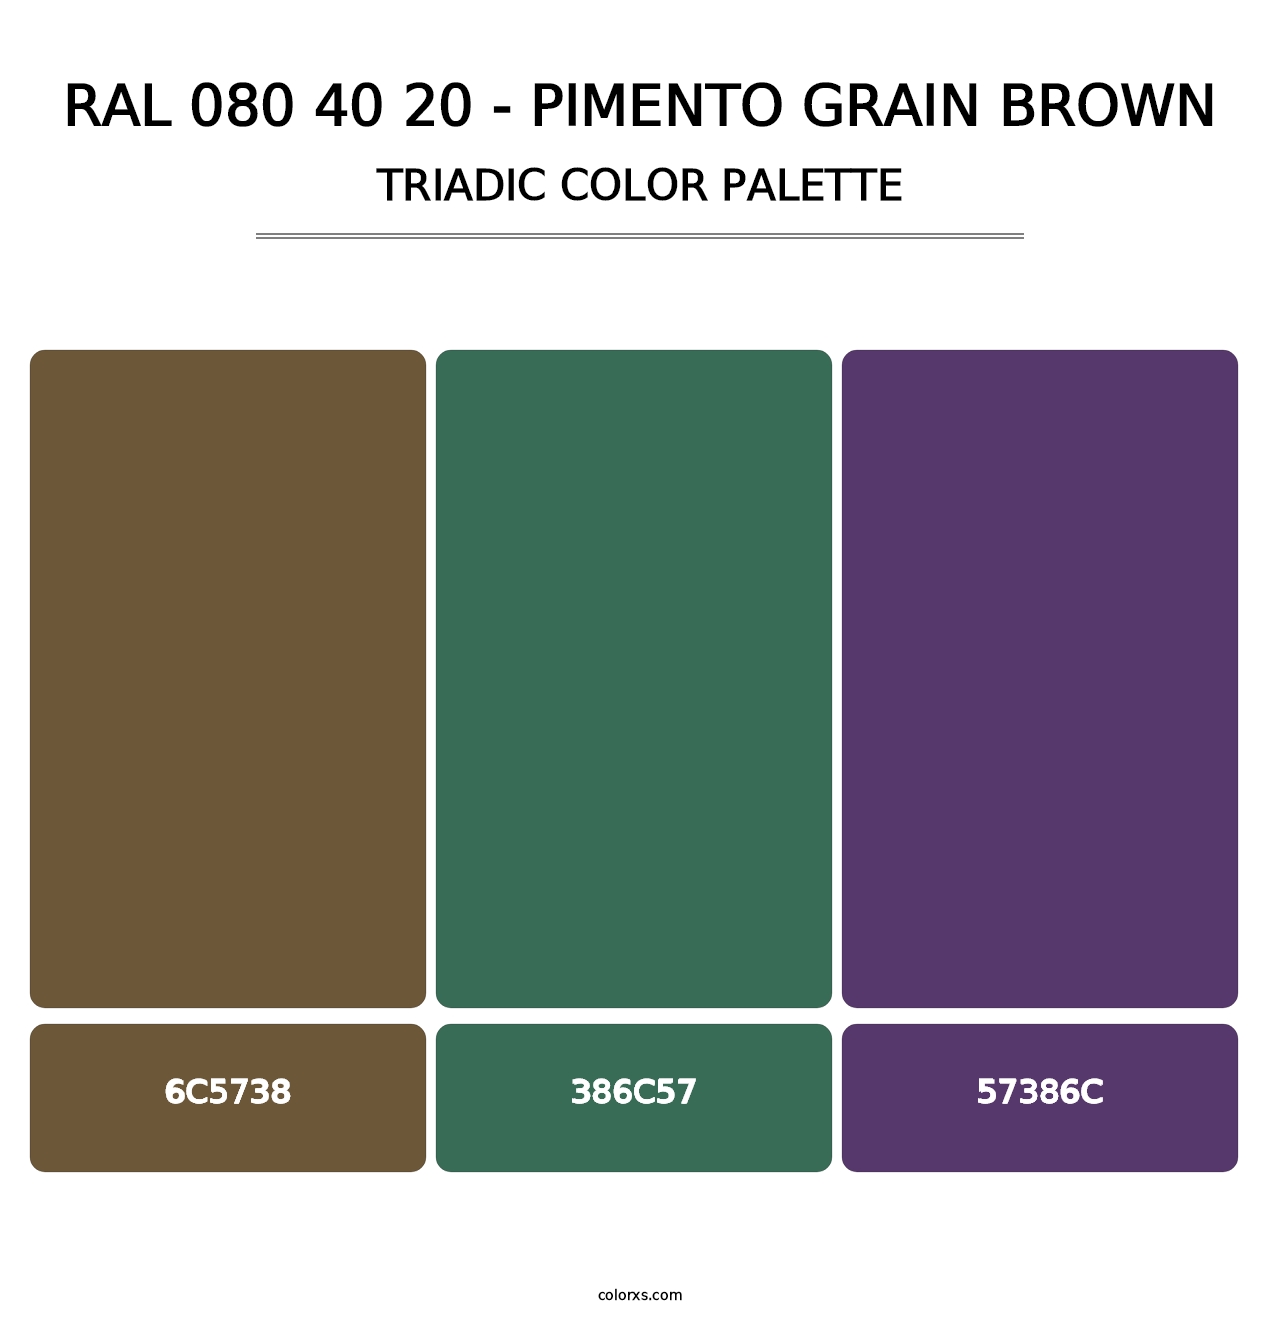 RAL 080 40 20 - Pimento Grain Brown - Triadic Color Palette